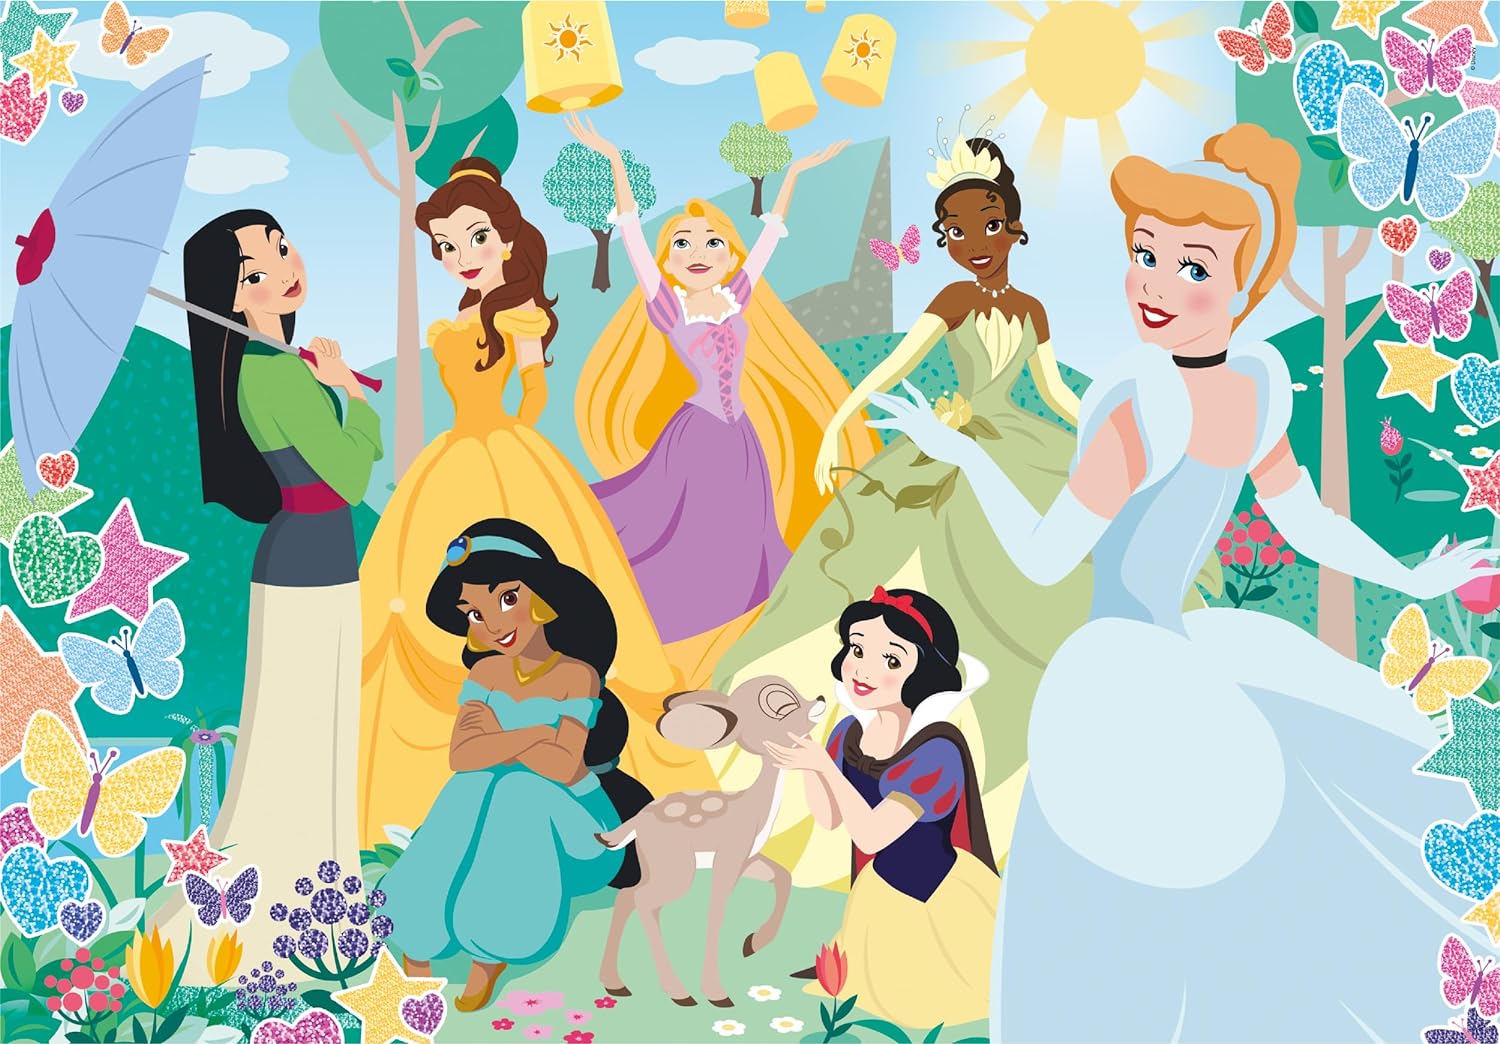 Puzzle Glitter 104 Piezas | Disney Princesas Clementoni